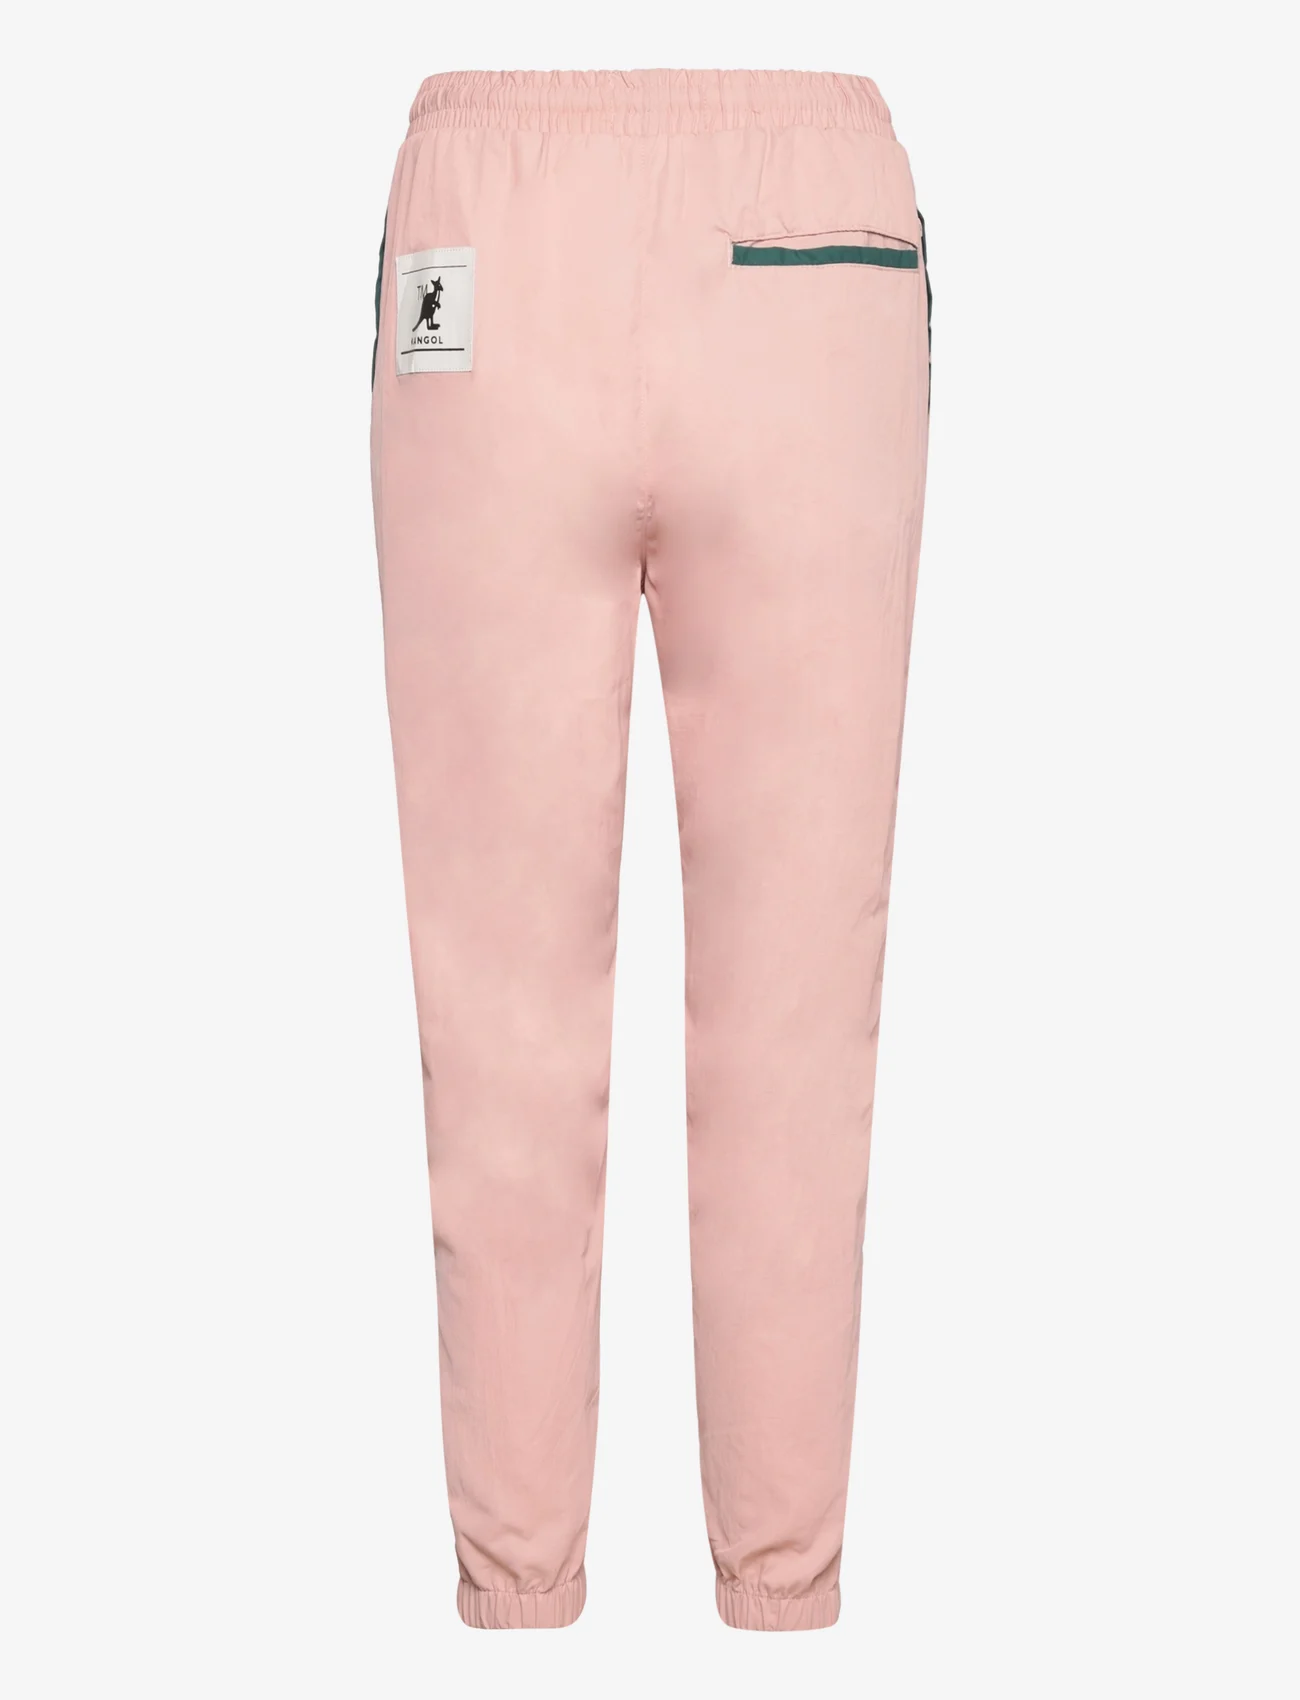 Kangol - KG TAMPA TRACK PANTS - slim fit trousers - light pink - 1